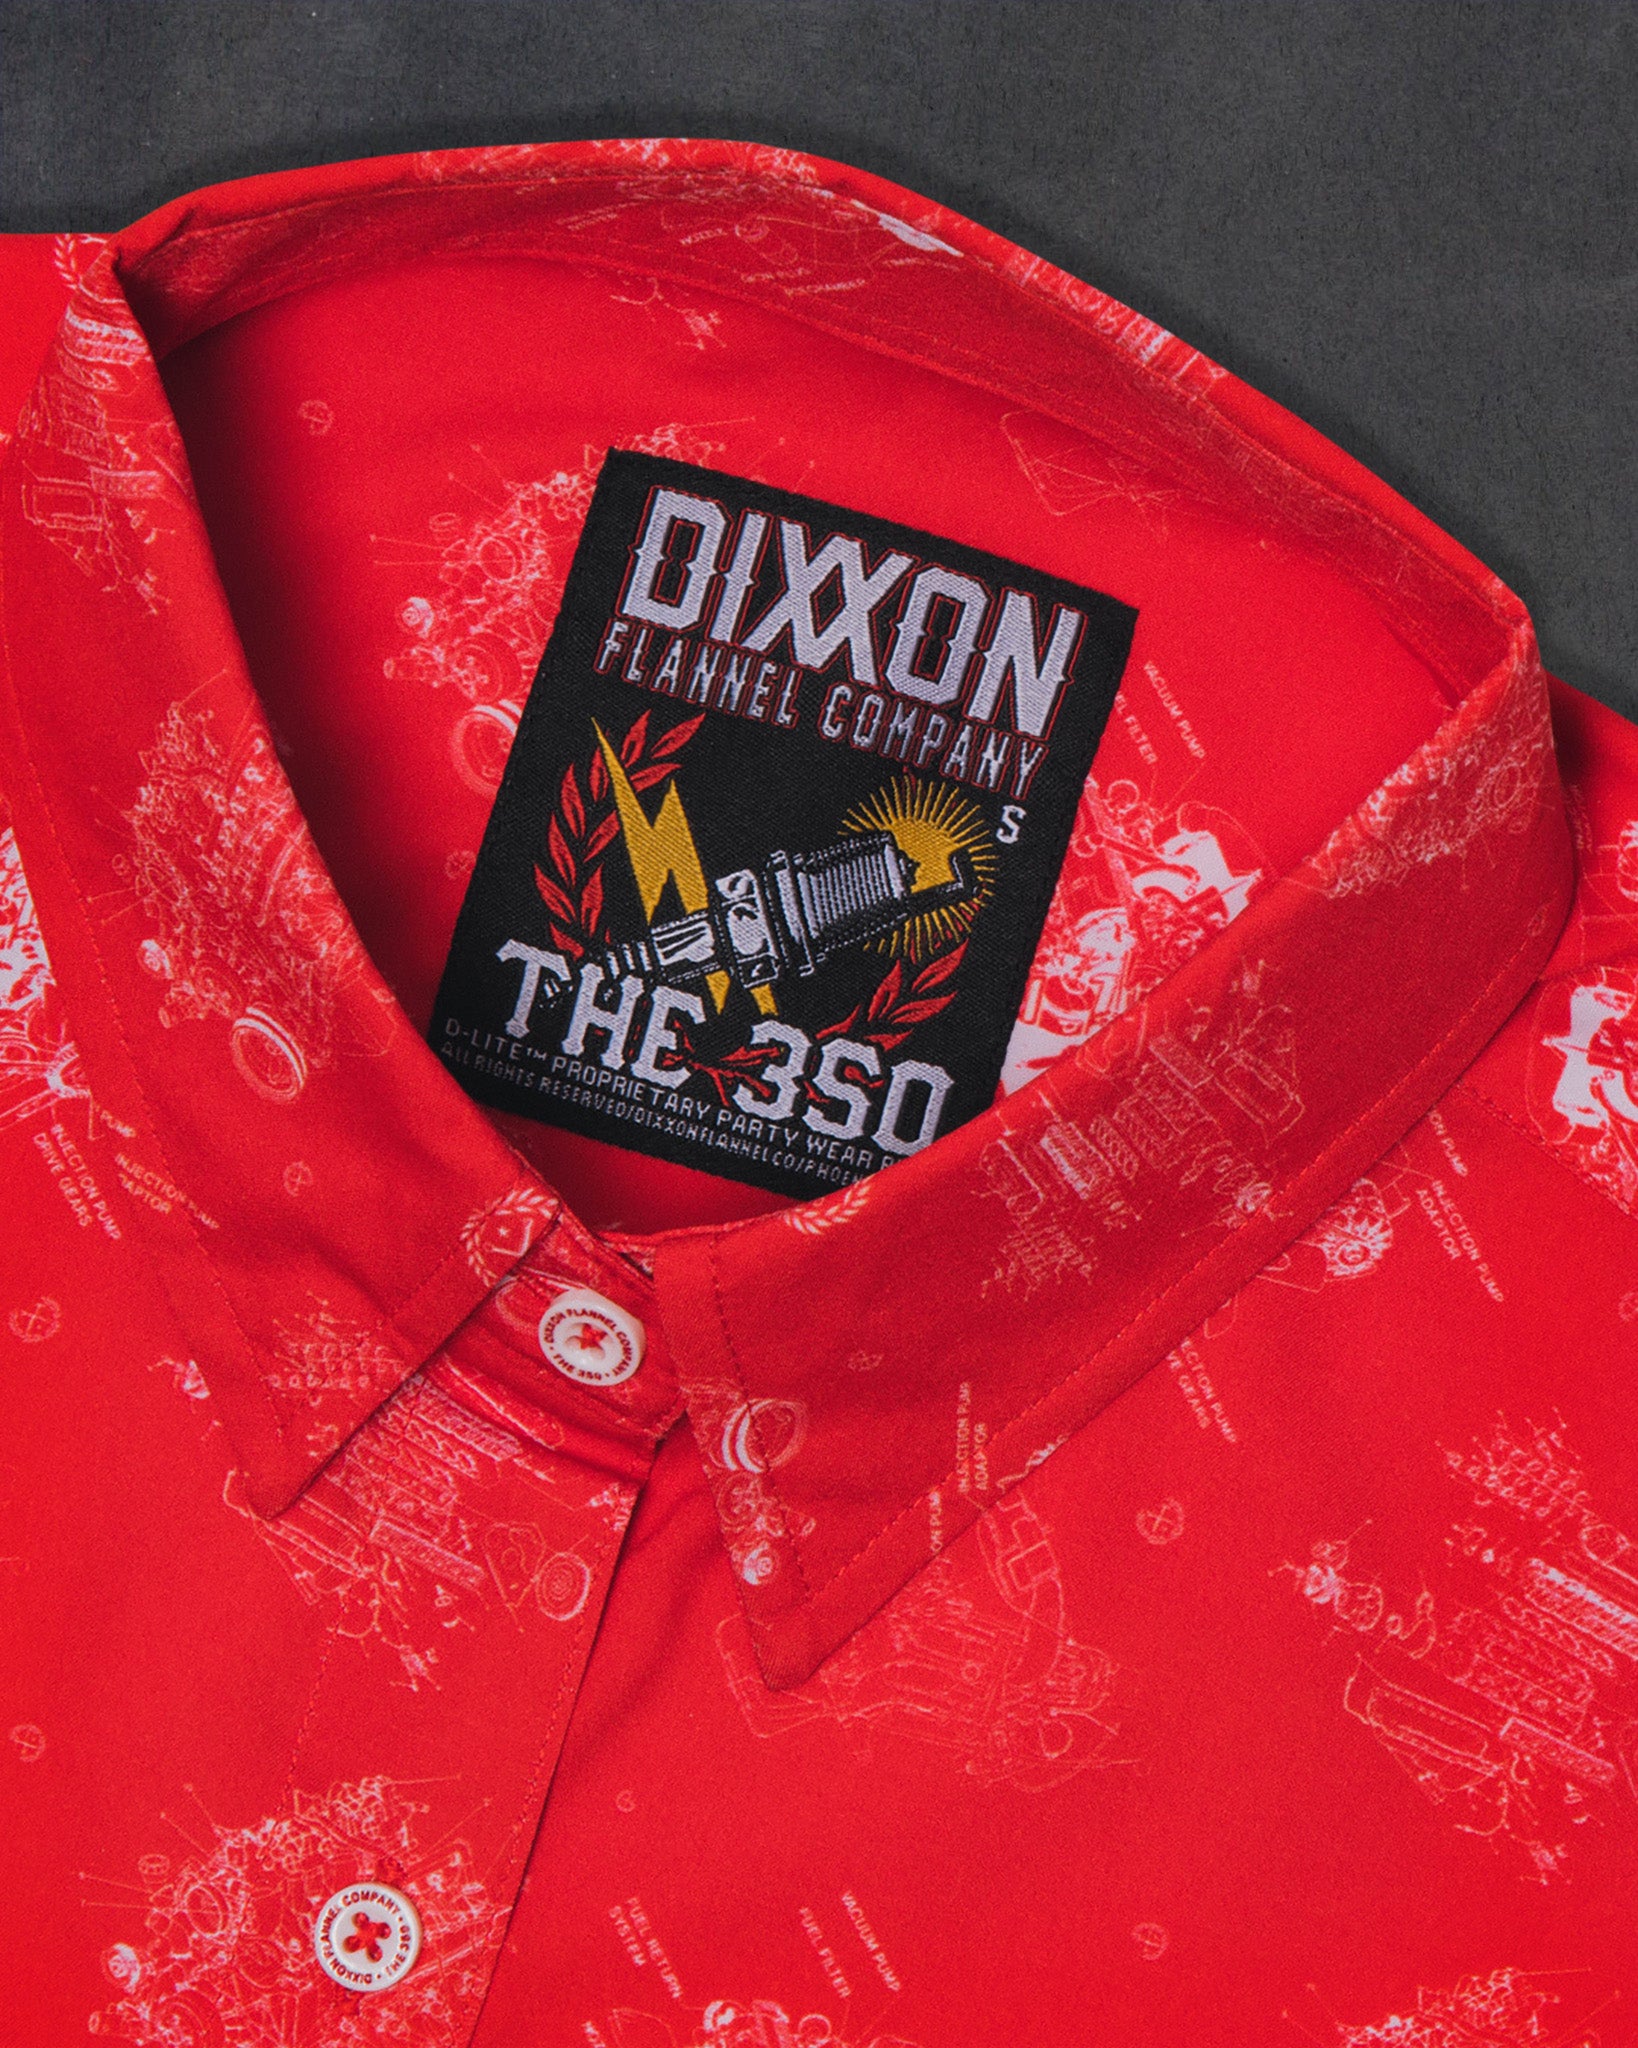 Dixxon Women's 350 Short Sleeve